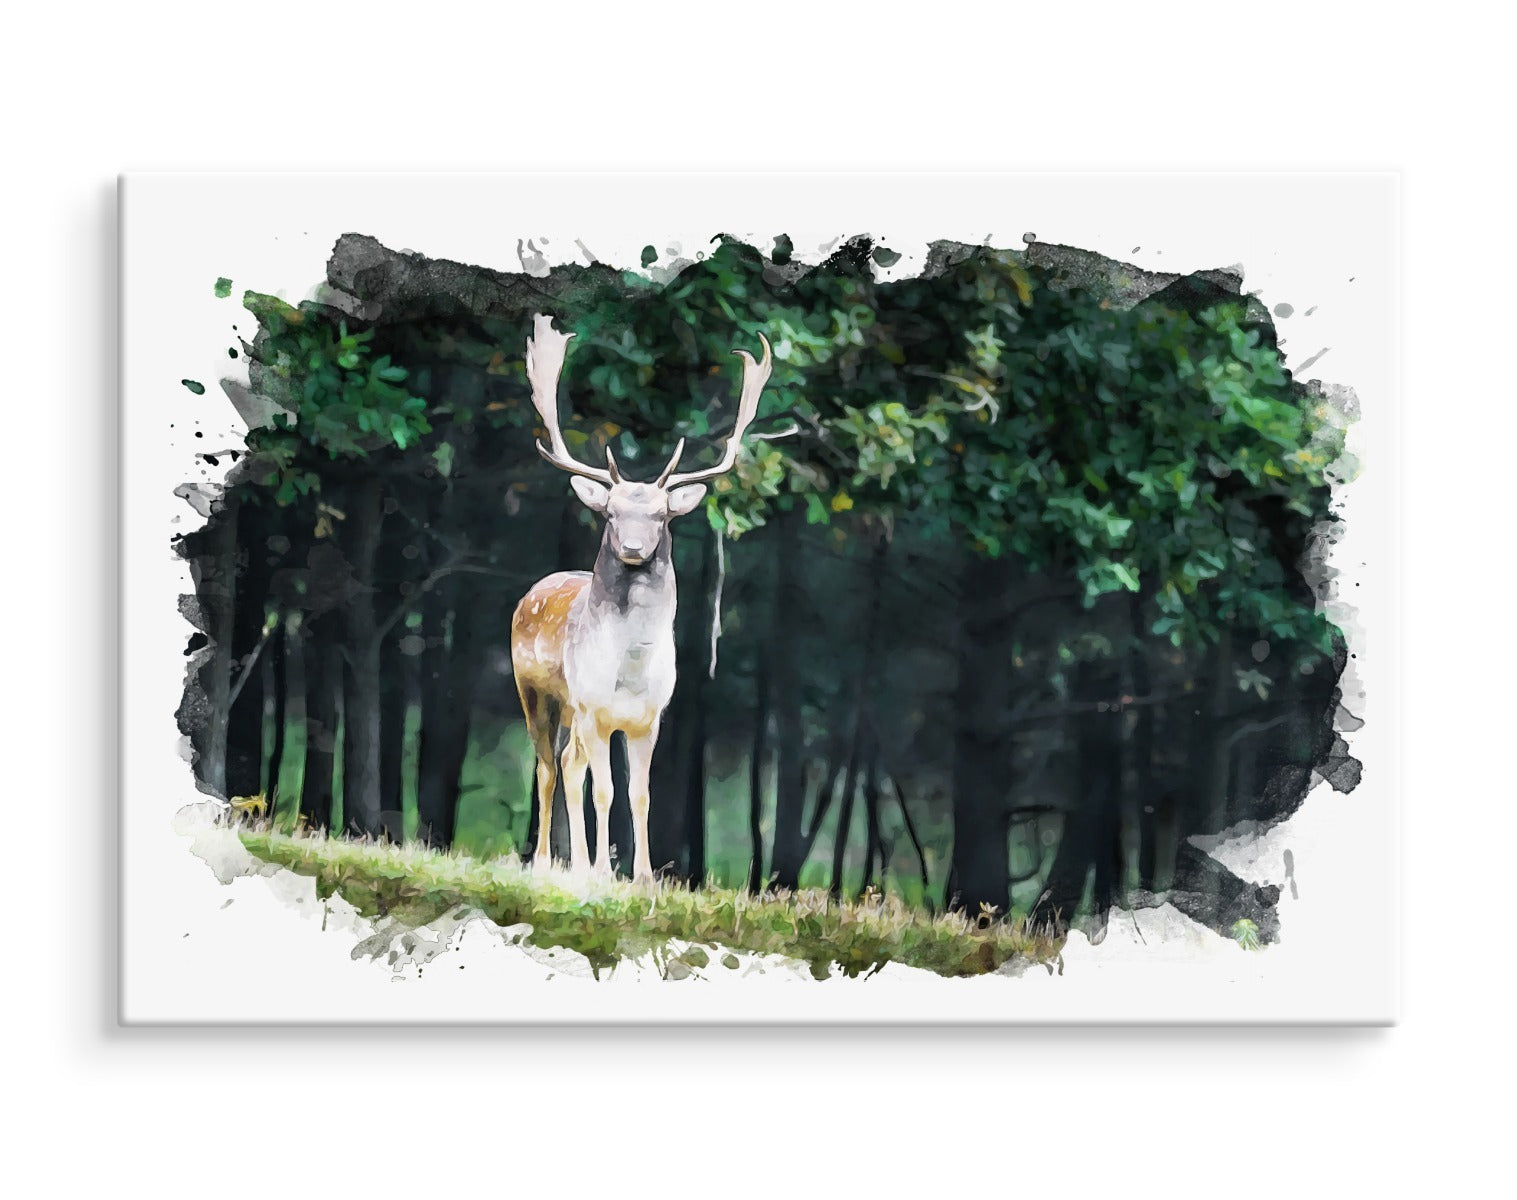 En hjort i skogen malt med akvarell